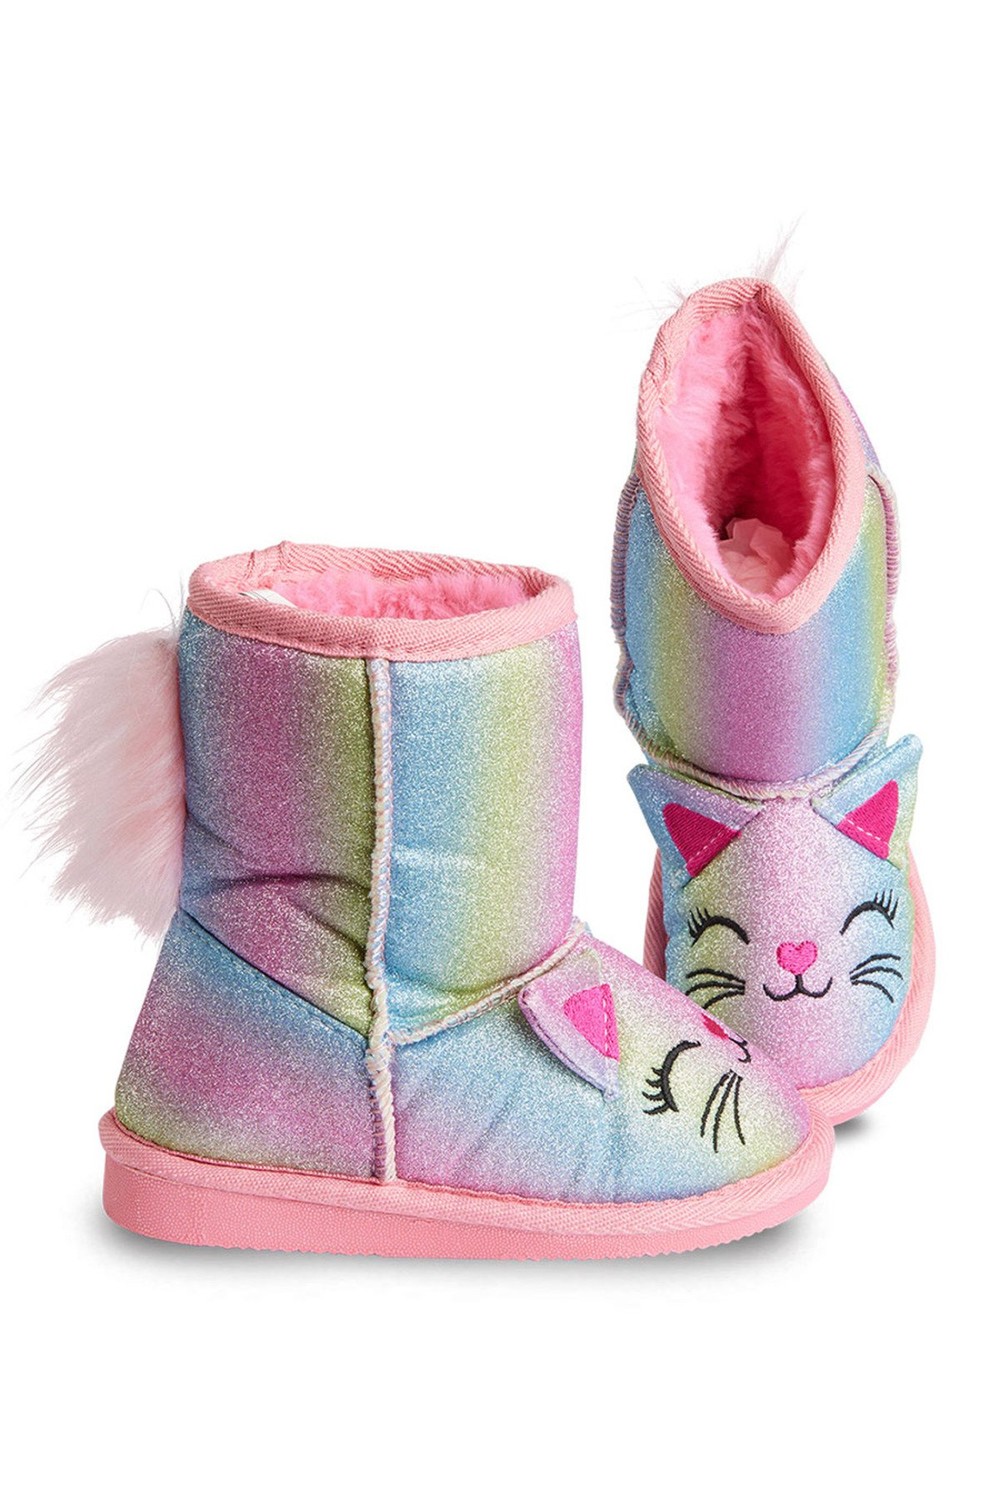 Denokids Cat-Colored Glittery Girls' Boots